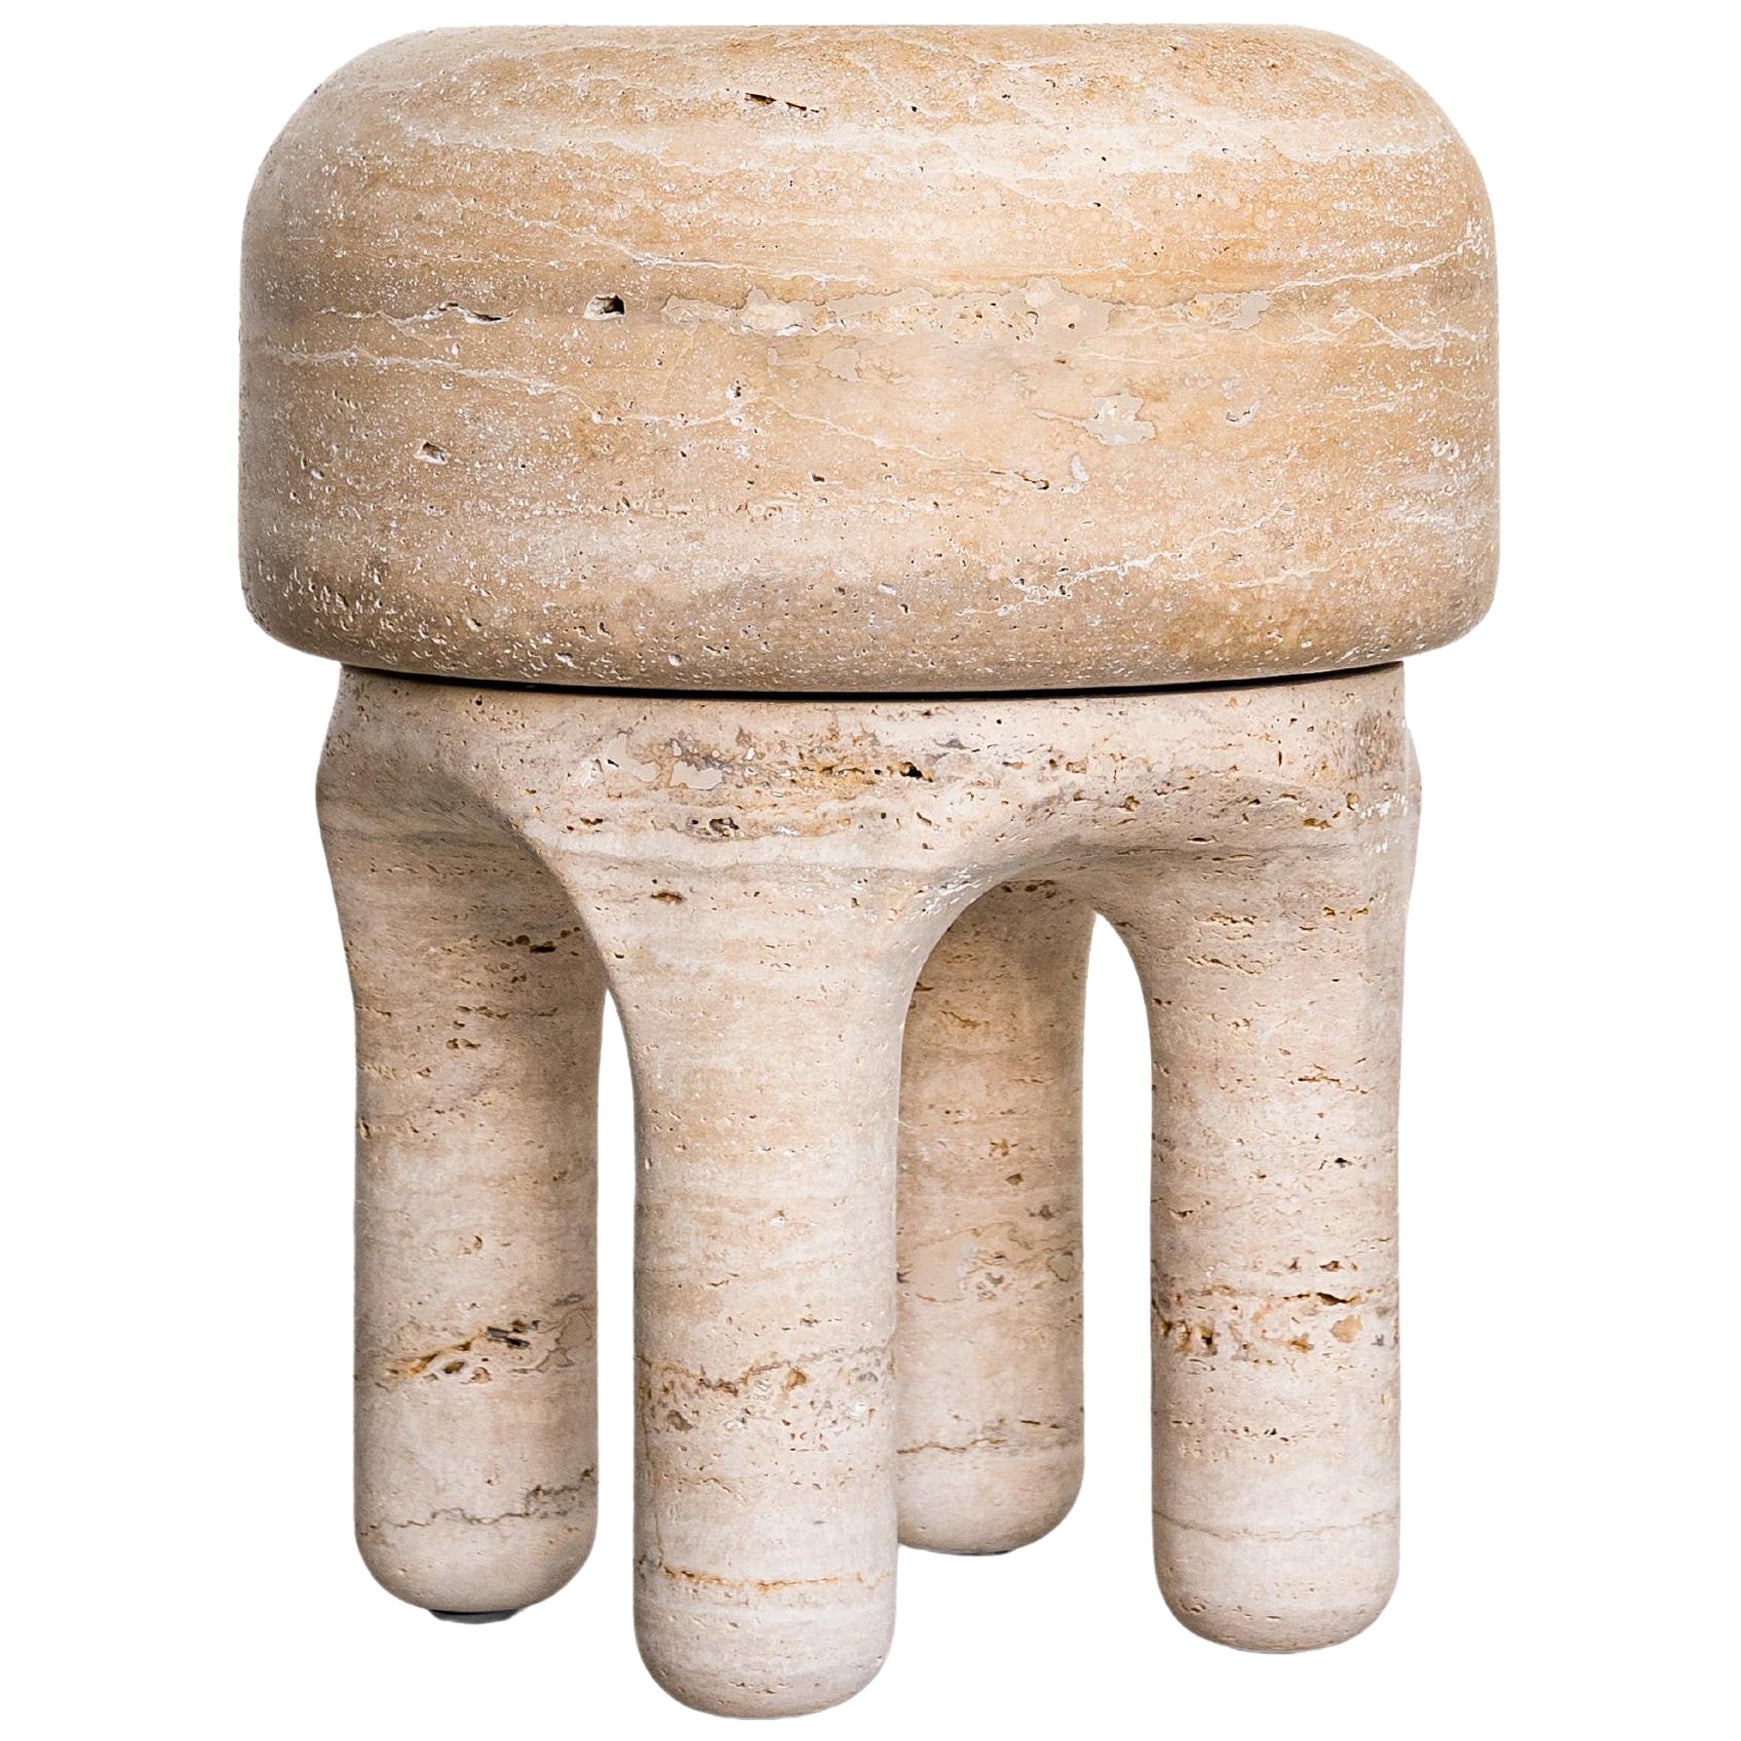 Organic Modern Stool Table Sculpture in Travertine - Urban Wabi Style